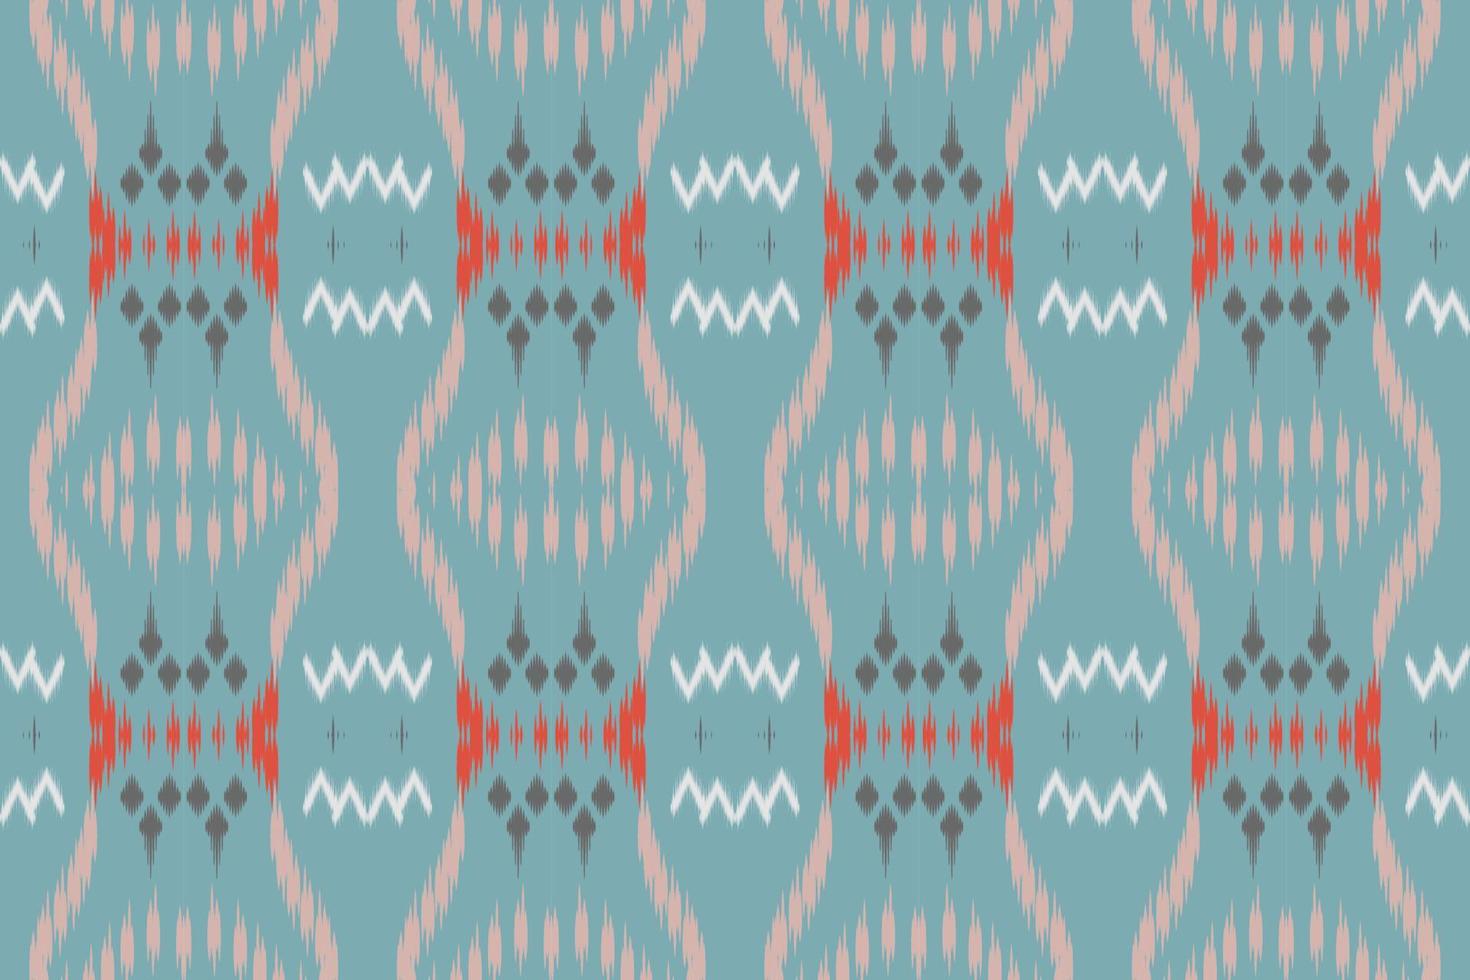 motivo ikat arte tribal azteca borneo escandinavo batik bohemio textura vector digital diseño para imprimir saree kurti tela cepillo símbolos muestras